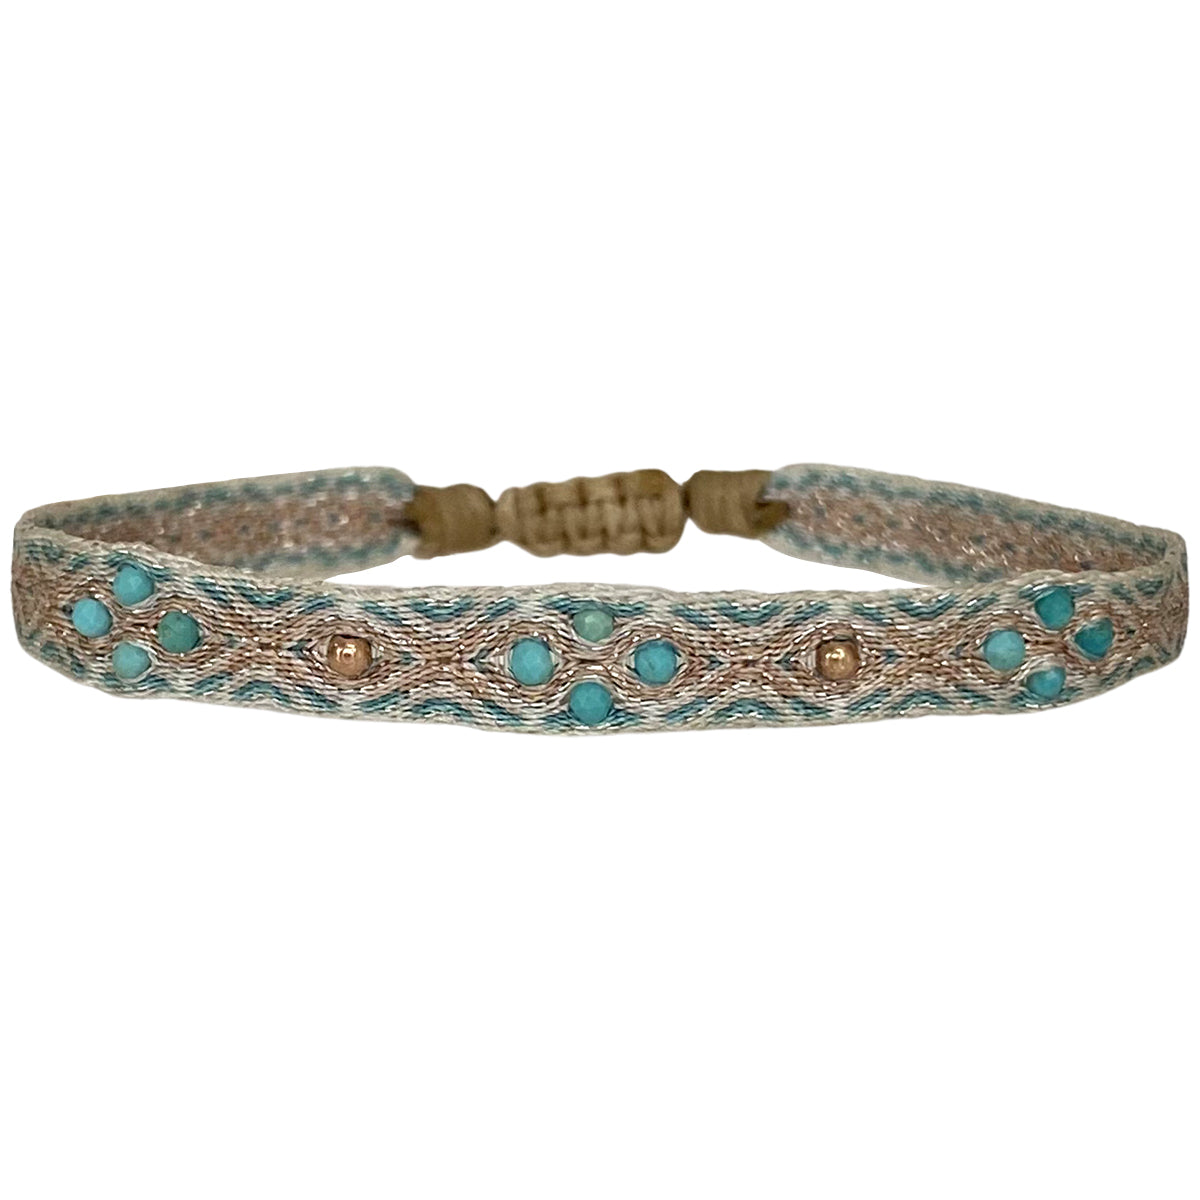 Rombo Handmade Women's Bracelet with Turquoise stones